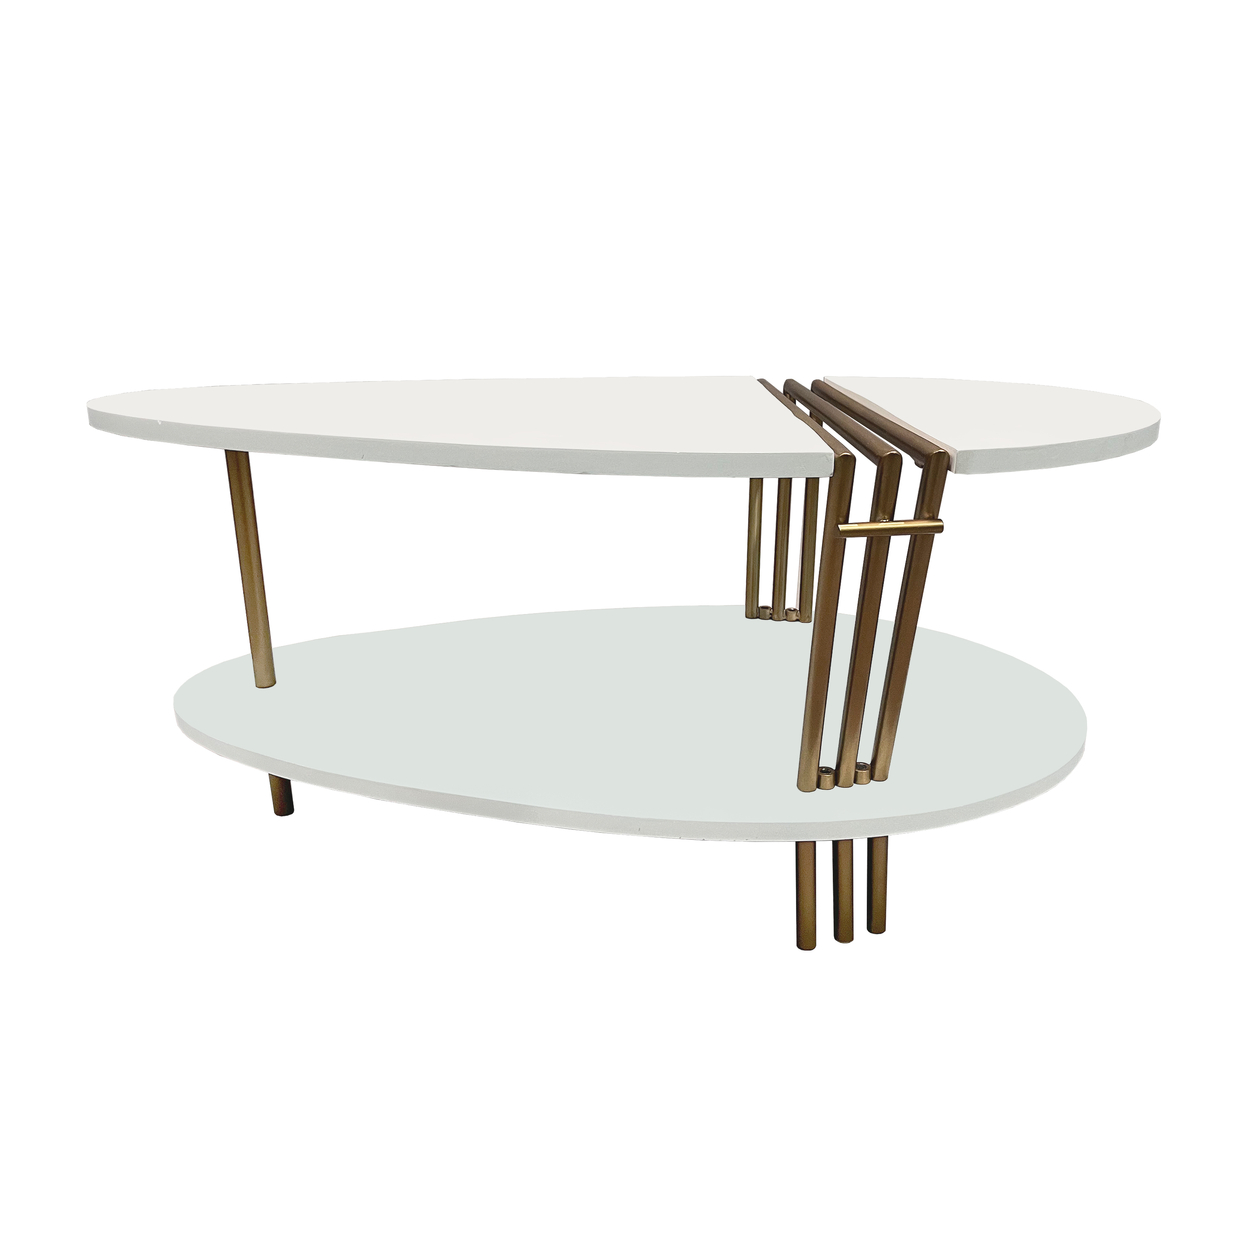 36 Inch Modern Coffee Table, Oval Elliptical Shape, White Mango Wood With Antique Brass-Saltoro Sherpi